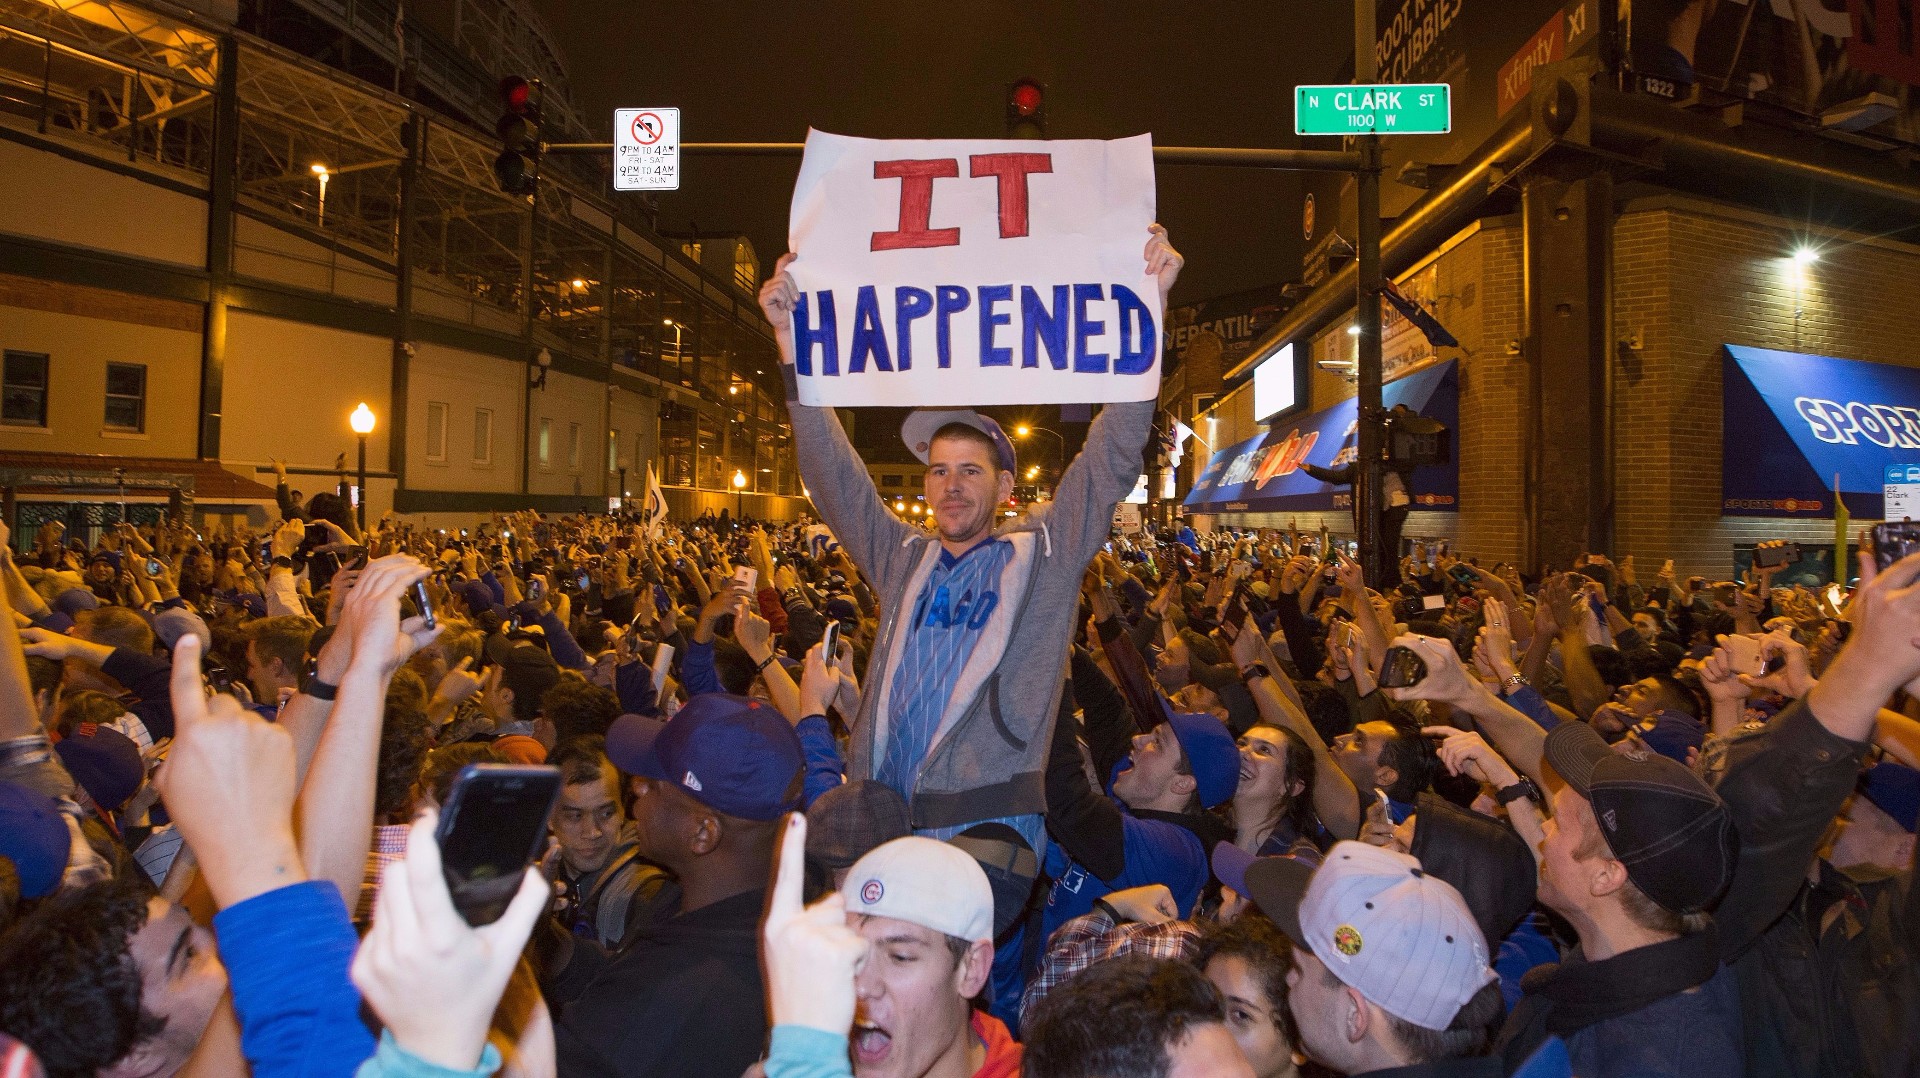 Steve Bartman 'overjoyed' by Cubs' championship, won't crash